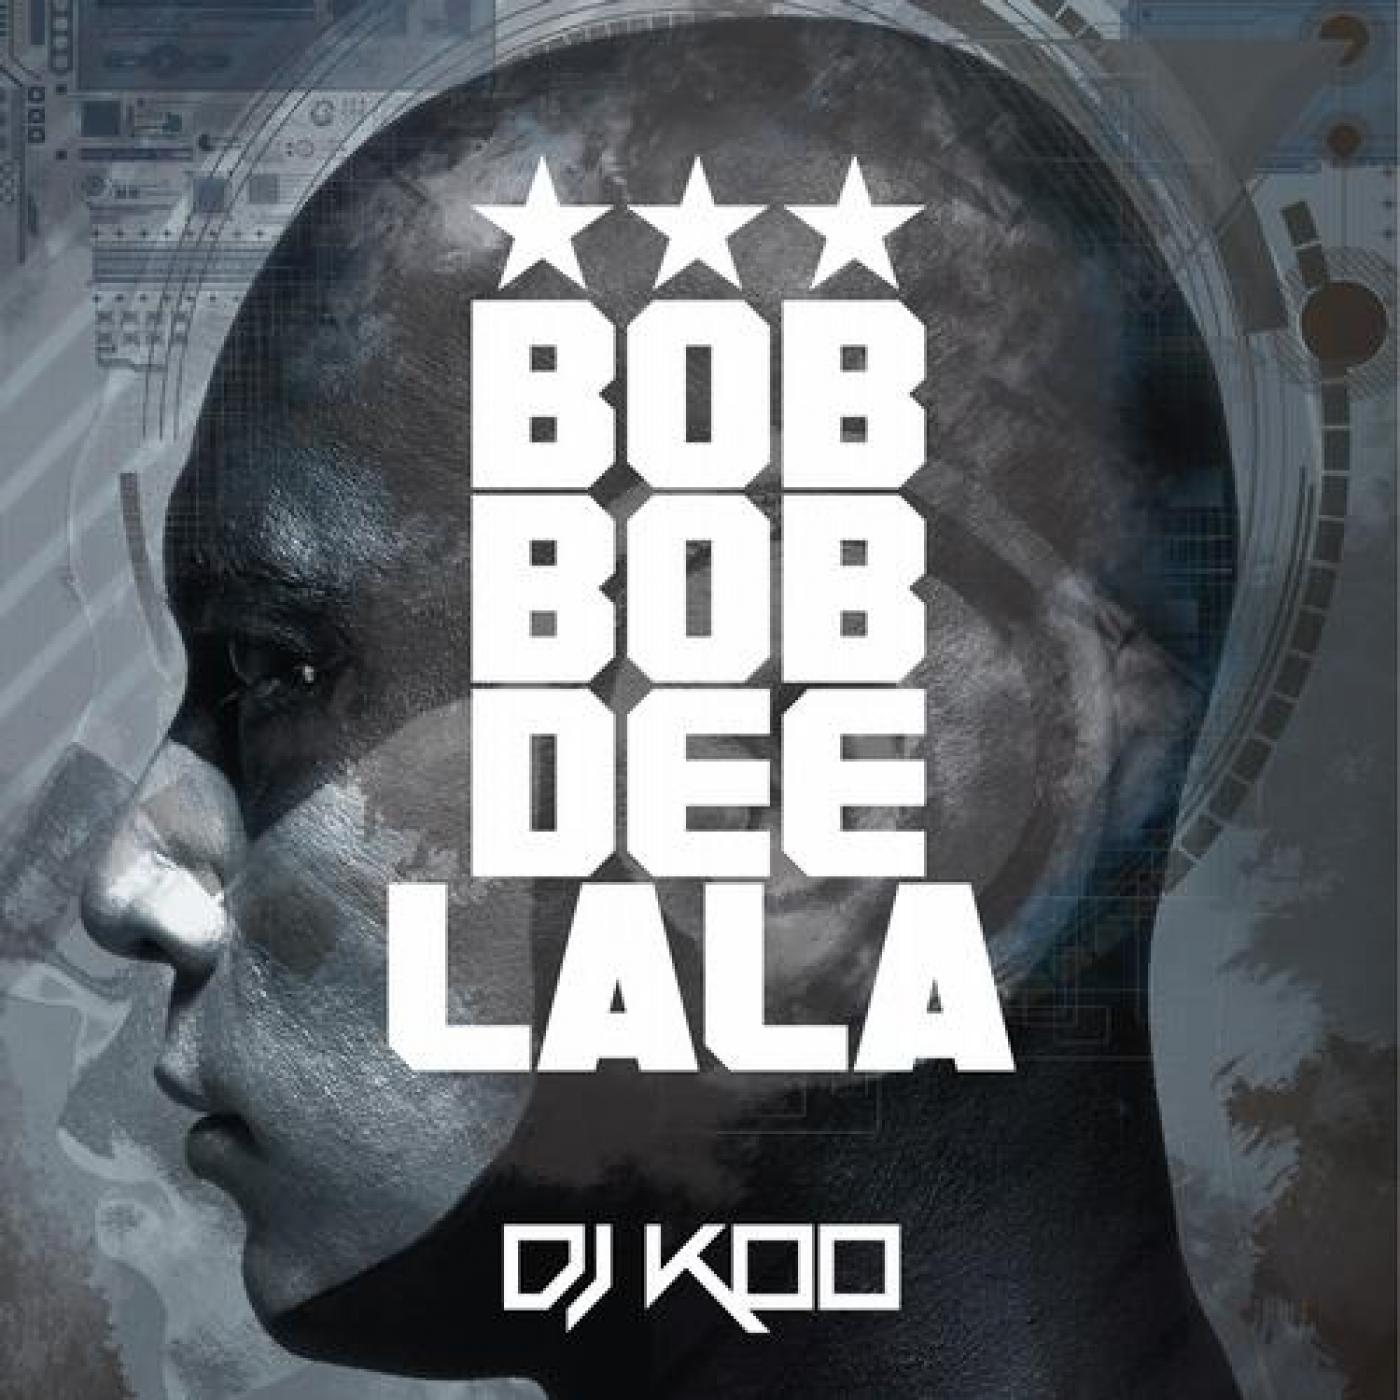 Bob Bob Dee Lala (Sionz Remix)